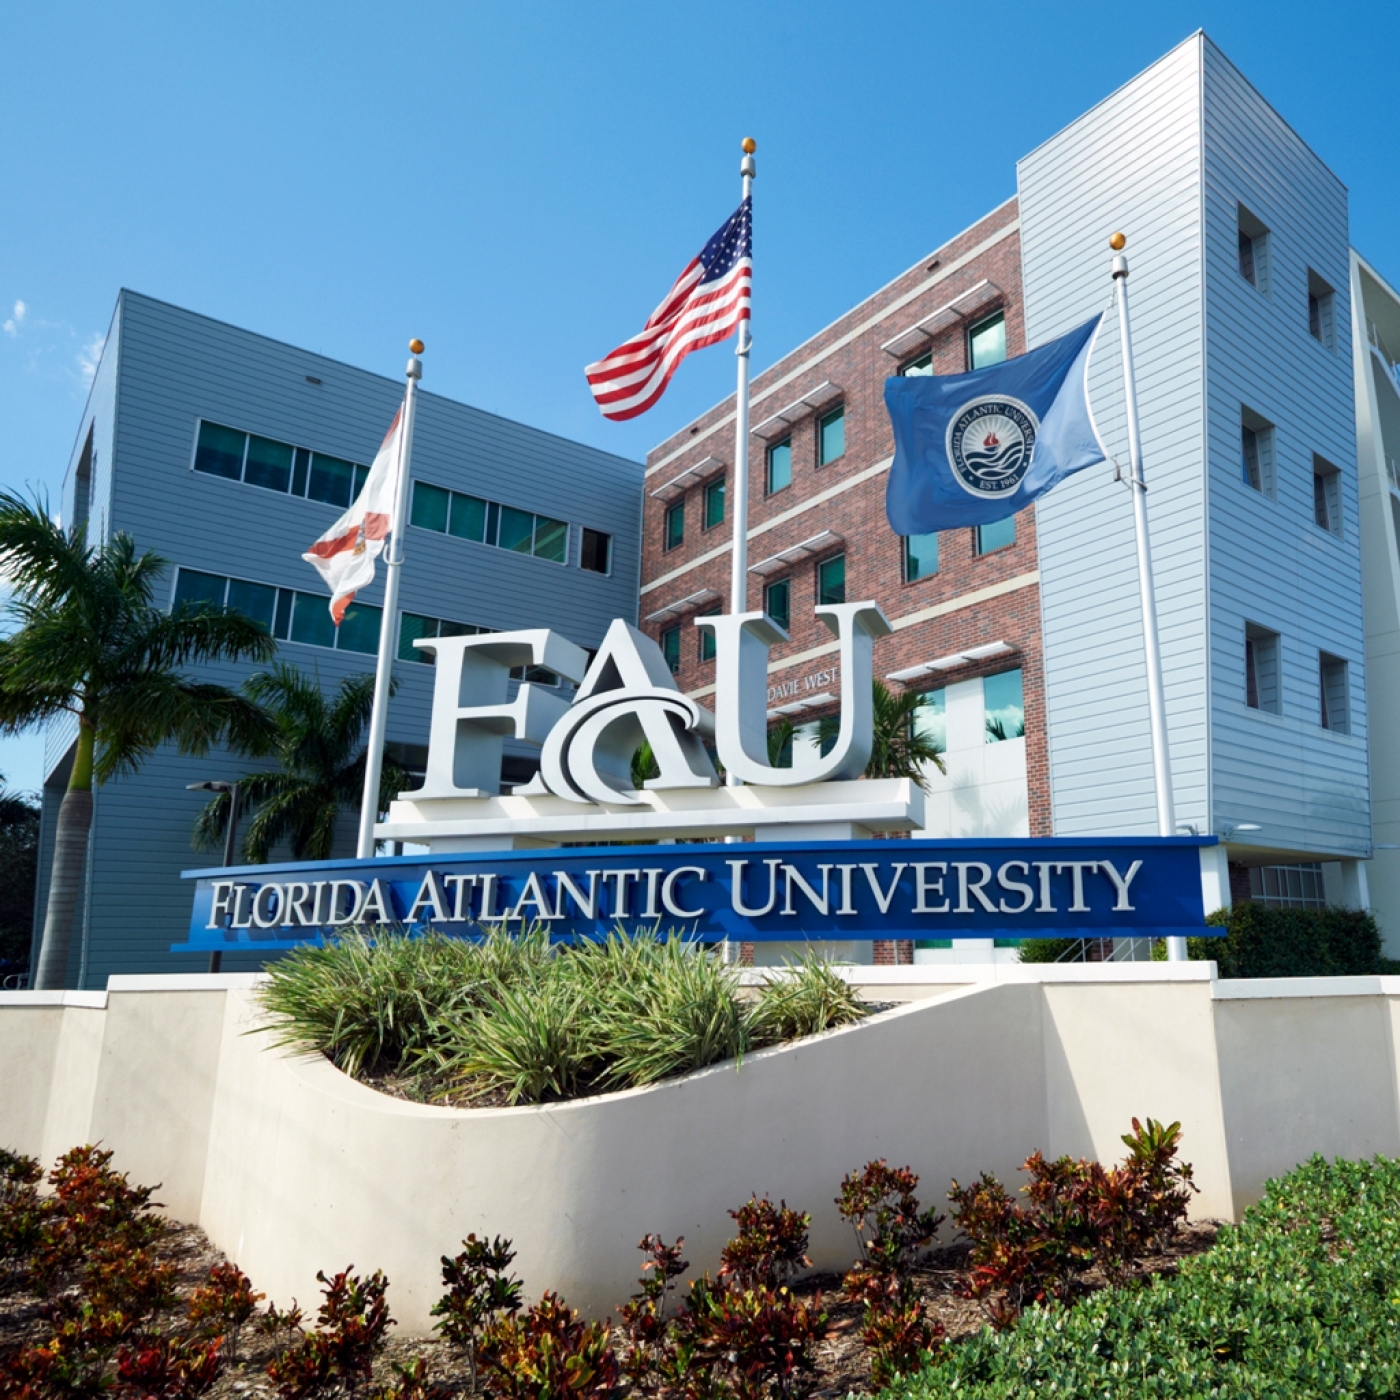 Study Group - Florida Atlantic University - Boca Raton Campus